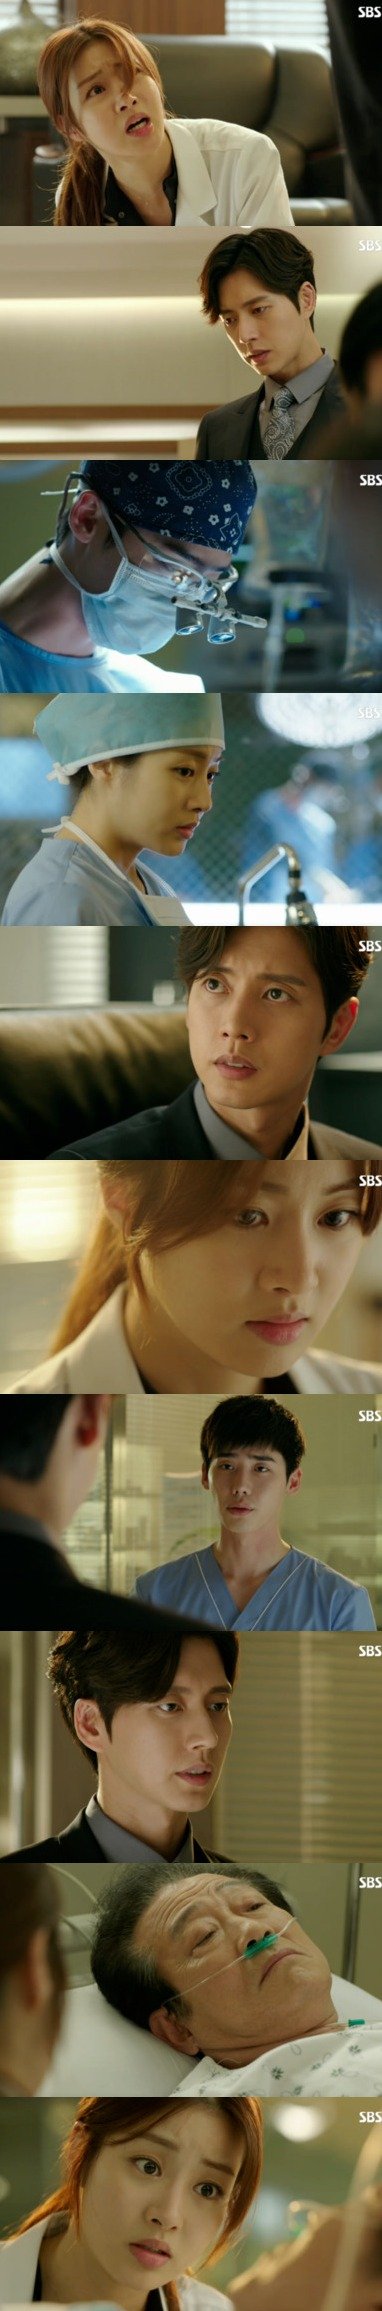 episode 19 captures for the Korean drama 'Doctor Stranger'